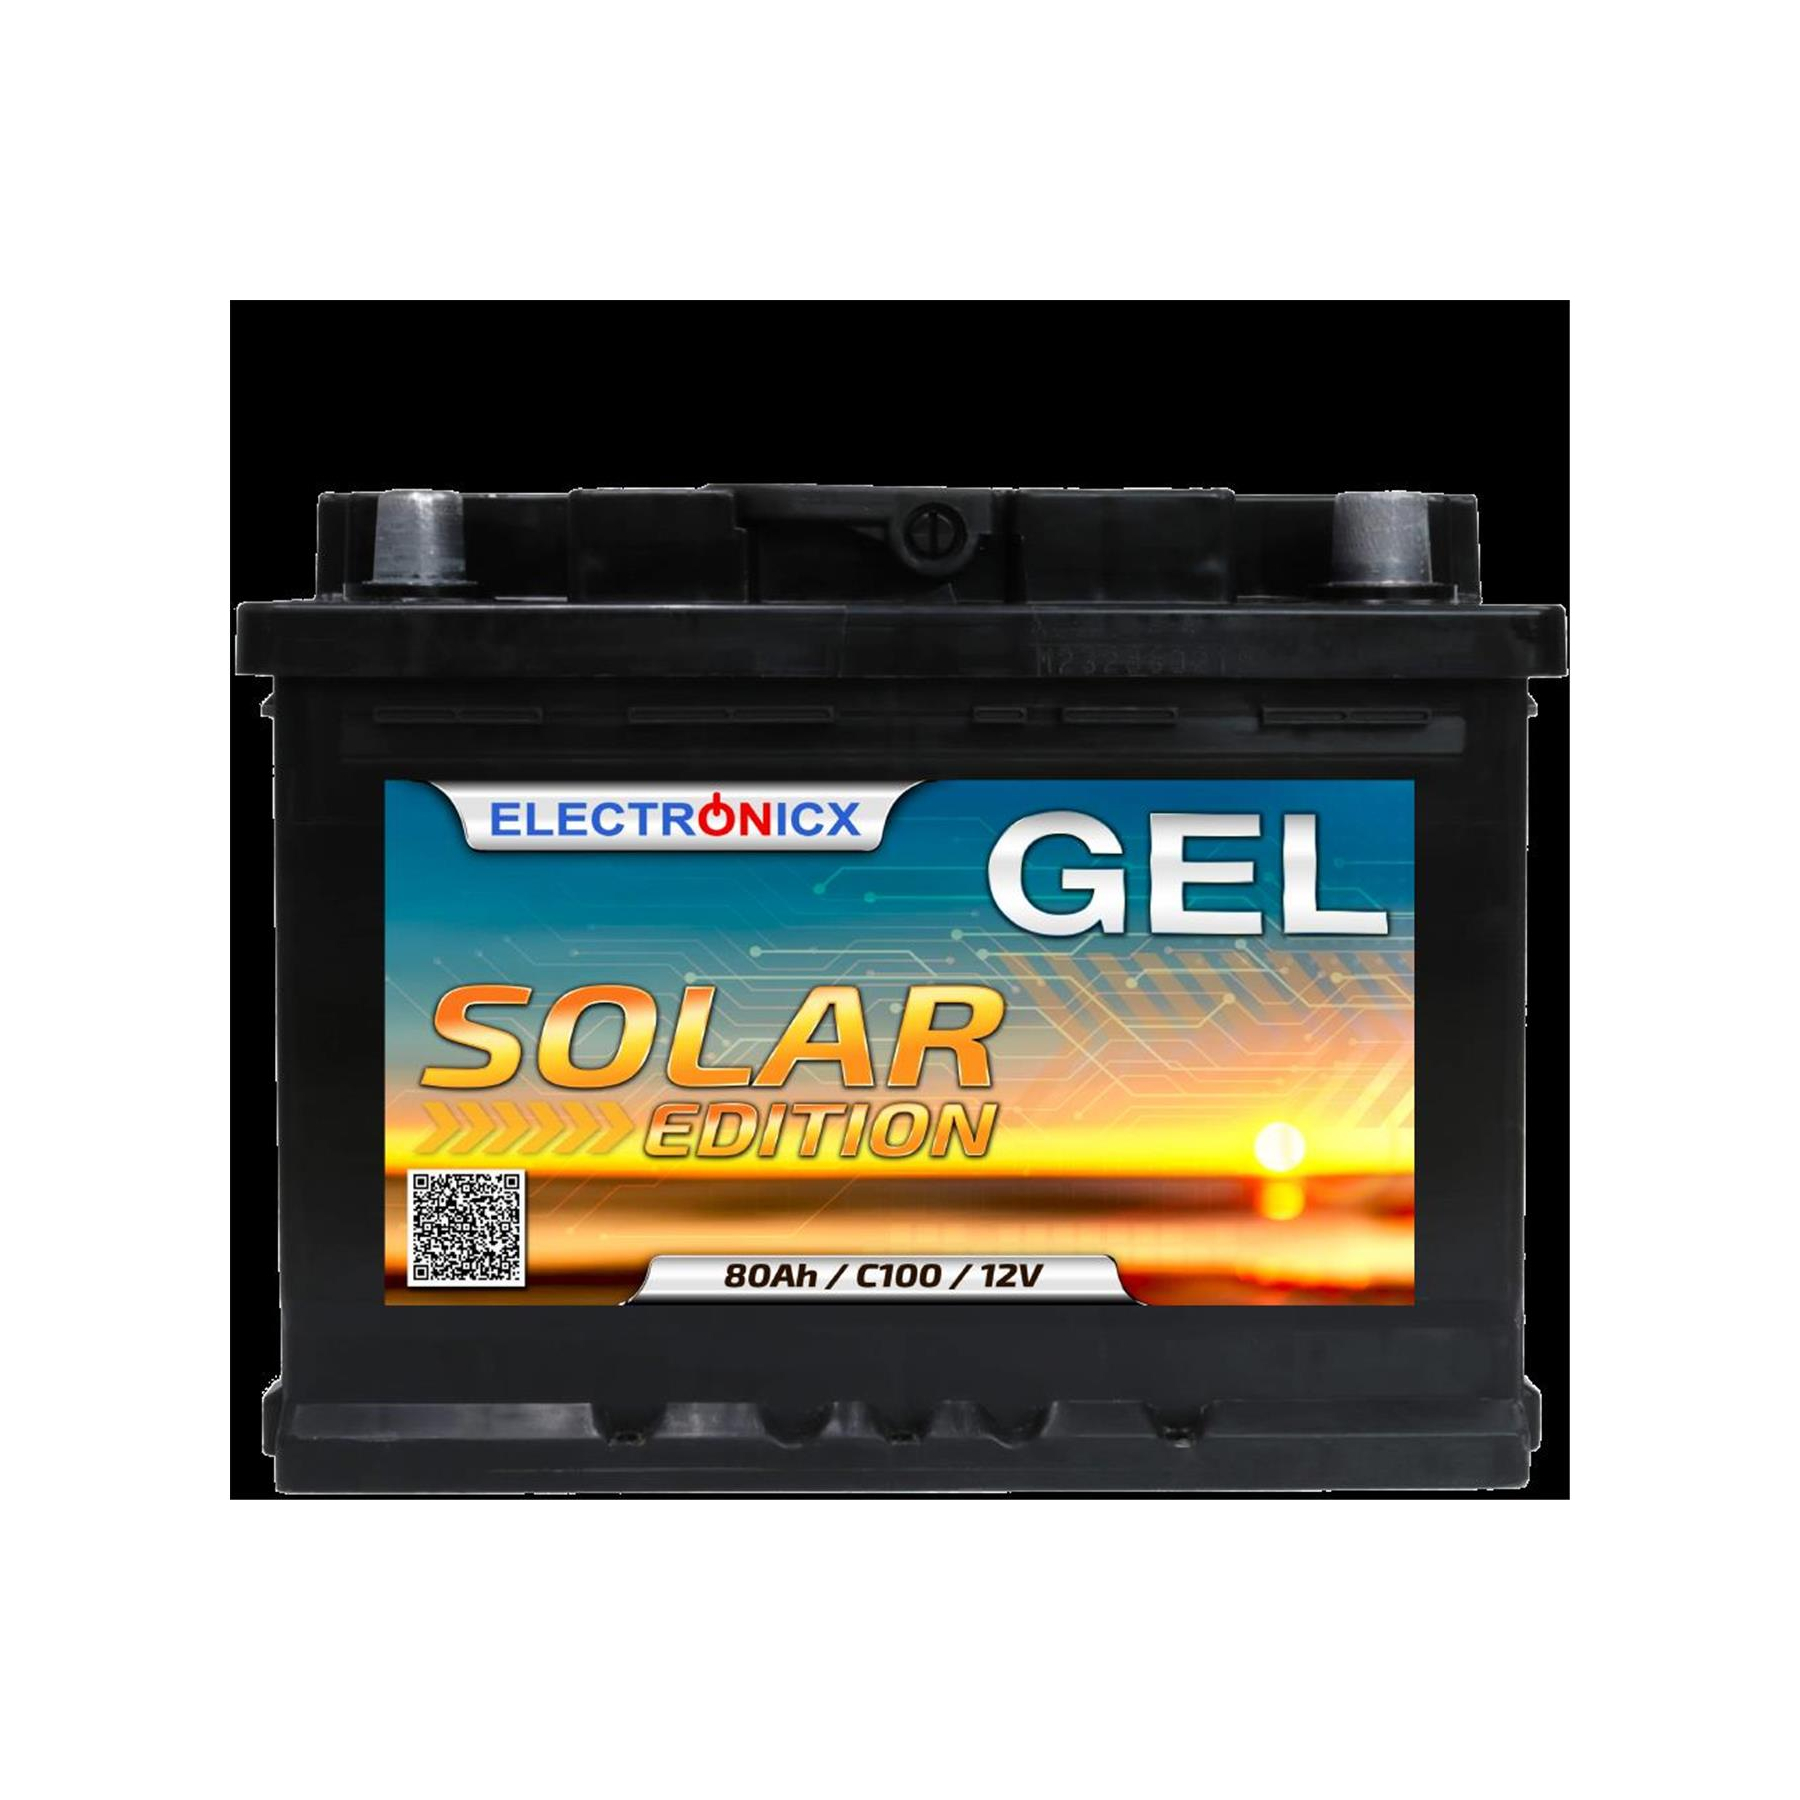 Solarbatterie 12V 80 AH Electronicx Solar Edition GEL, 119,99 €